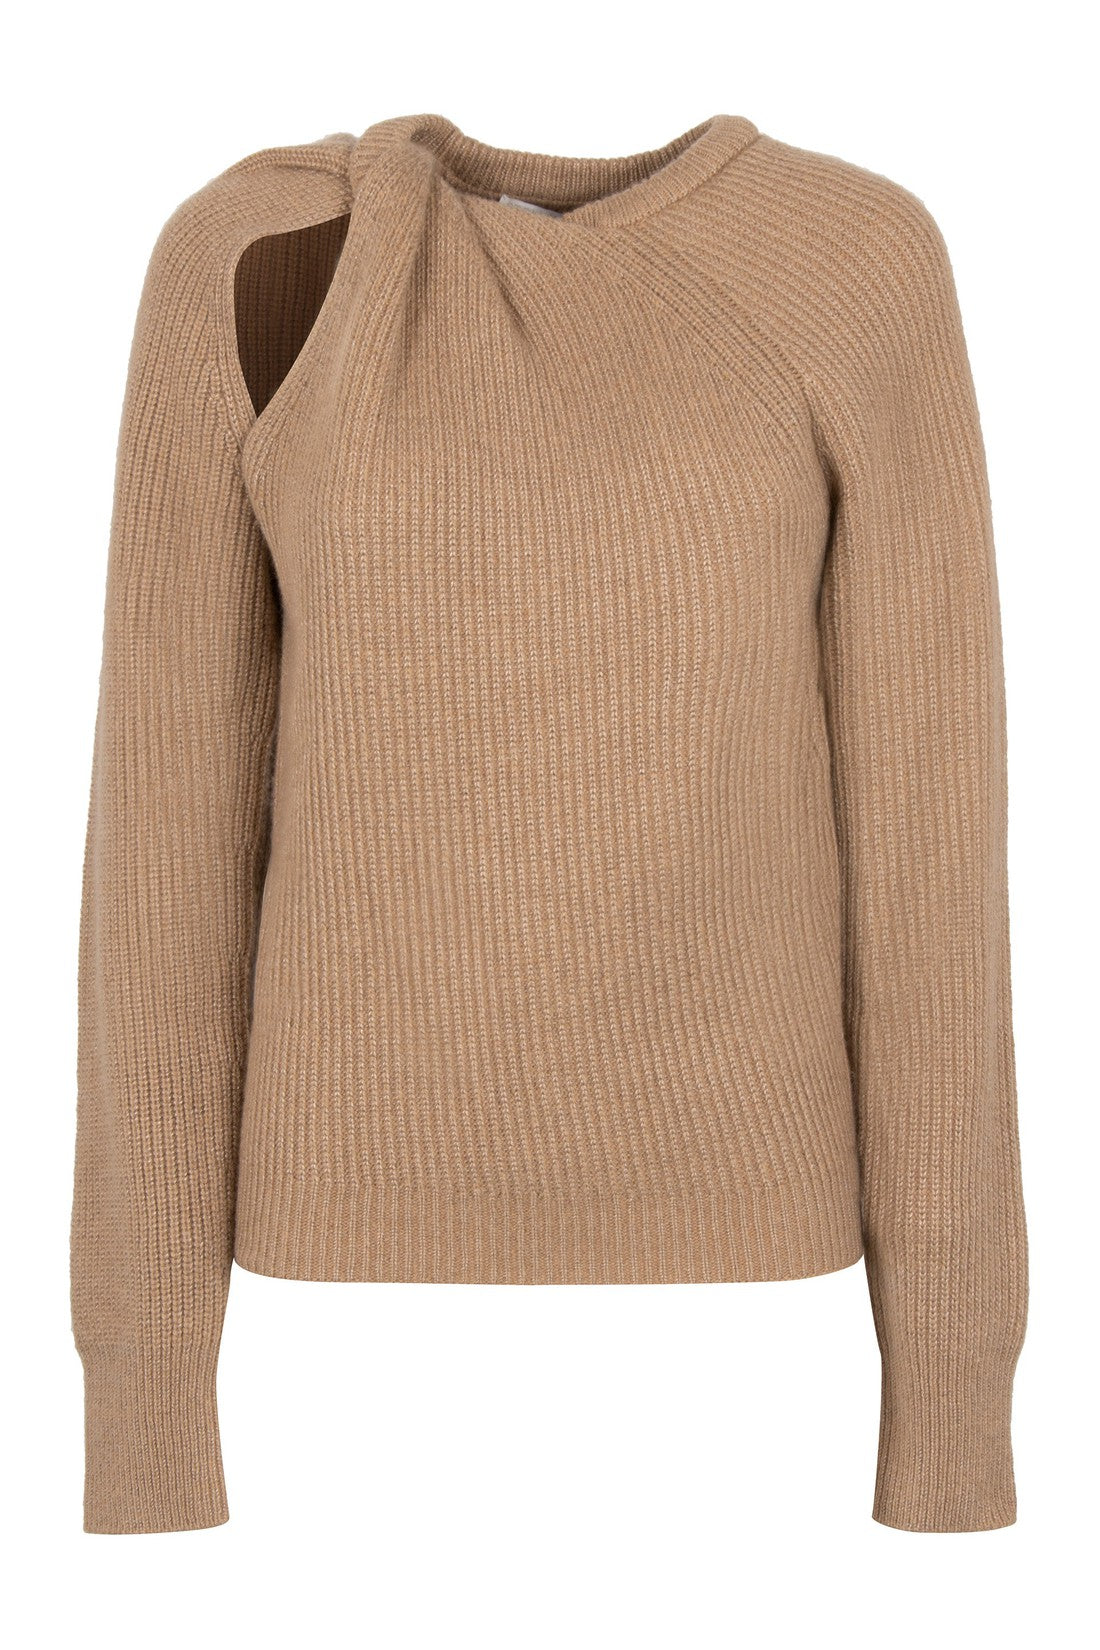 Stella McCartney-OUTLET-SALE-Crew-neck cashmere sweater-ARCHIVIST